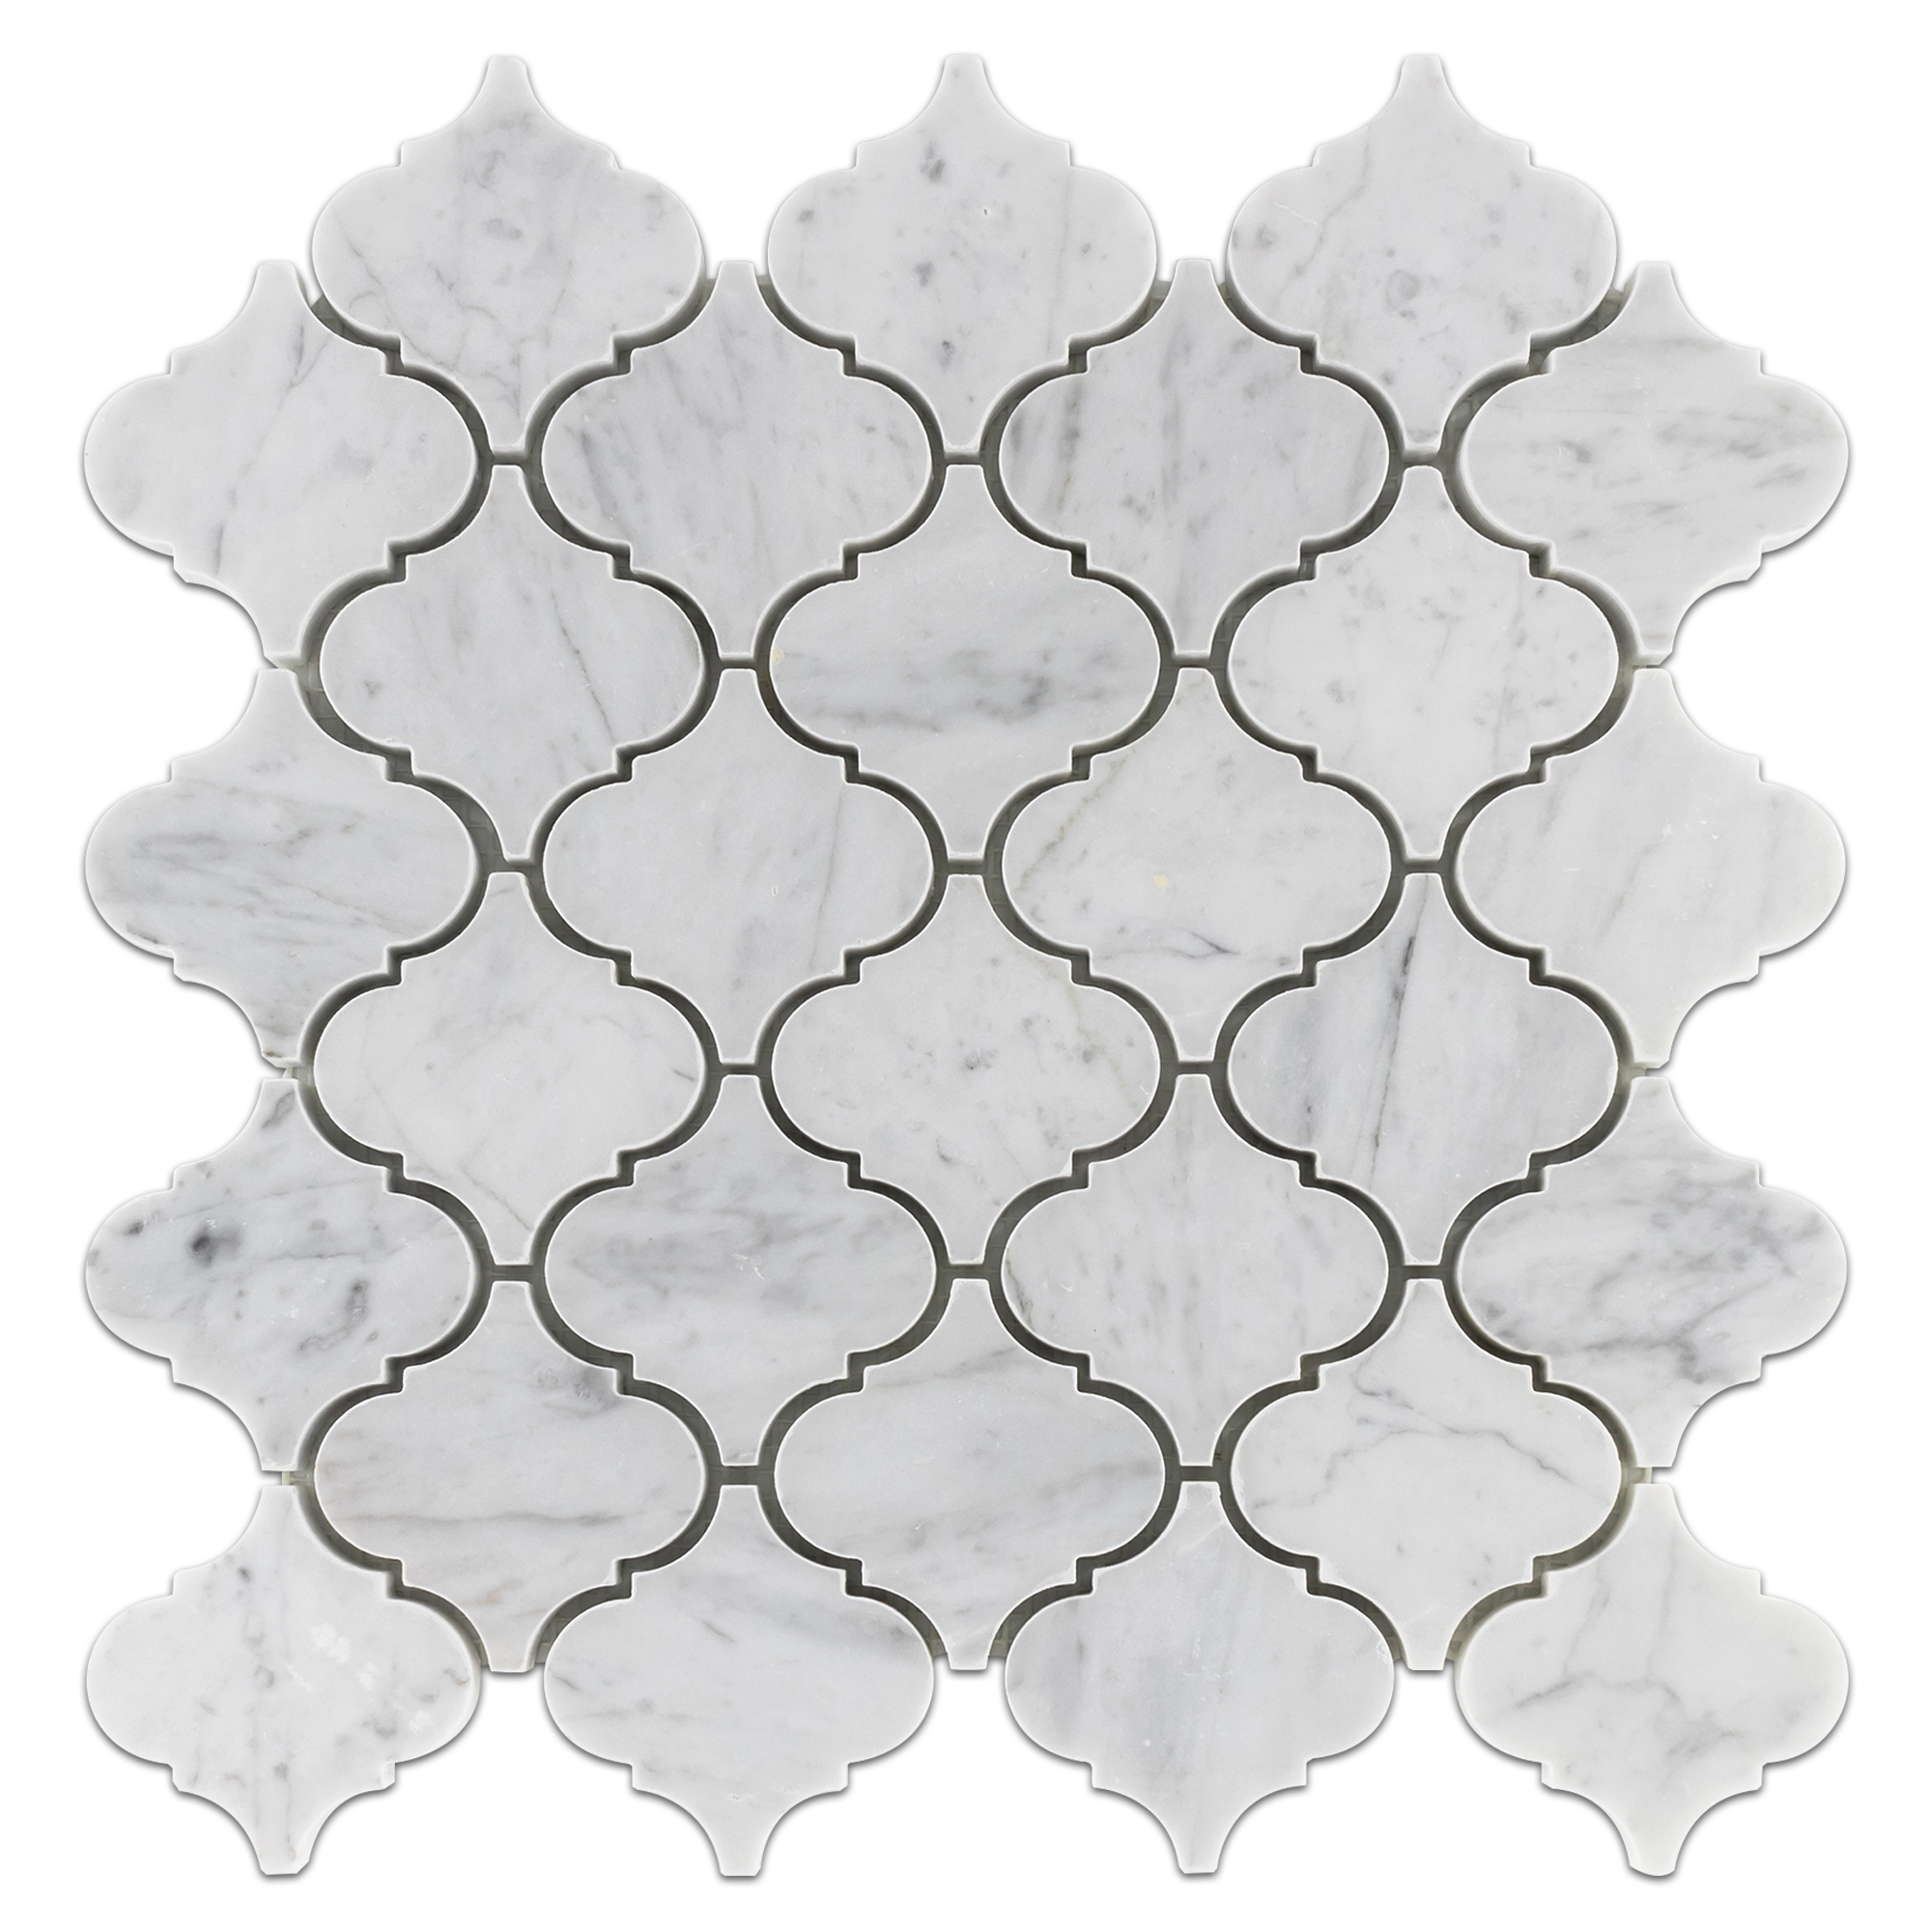 Elon Bianco Carrara Marble Lantern Field Mosaic Tile, 12x12 inch, Polished Finish, for Elegant Wall & Floor Designs